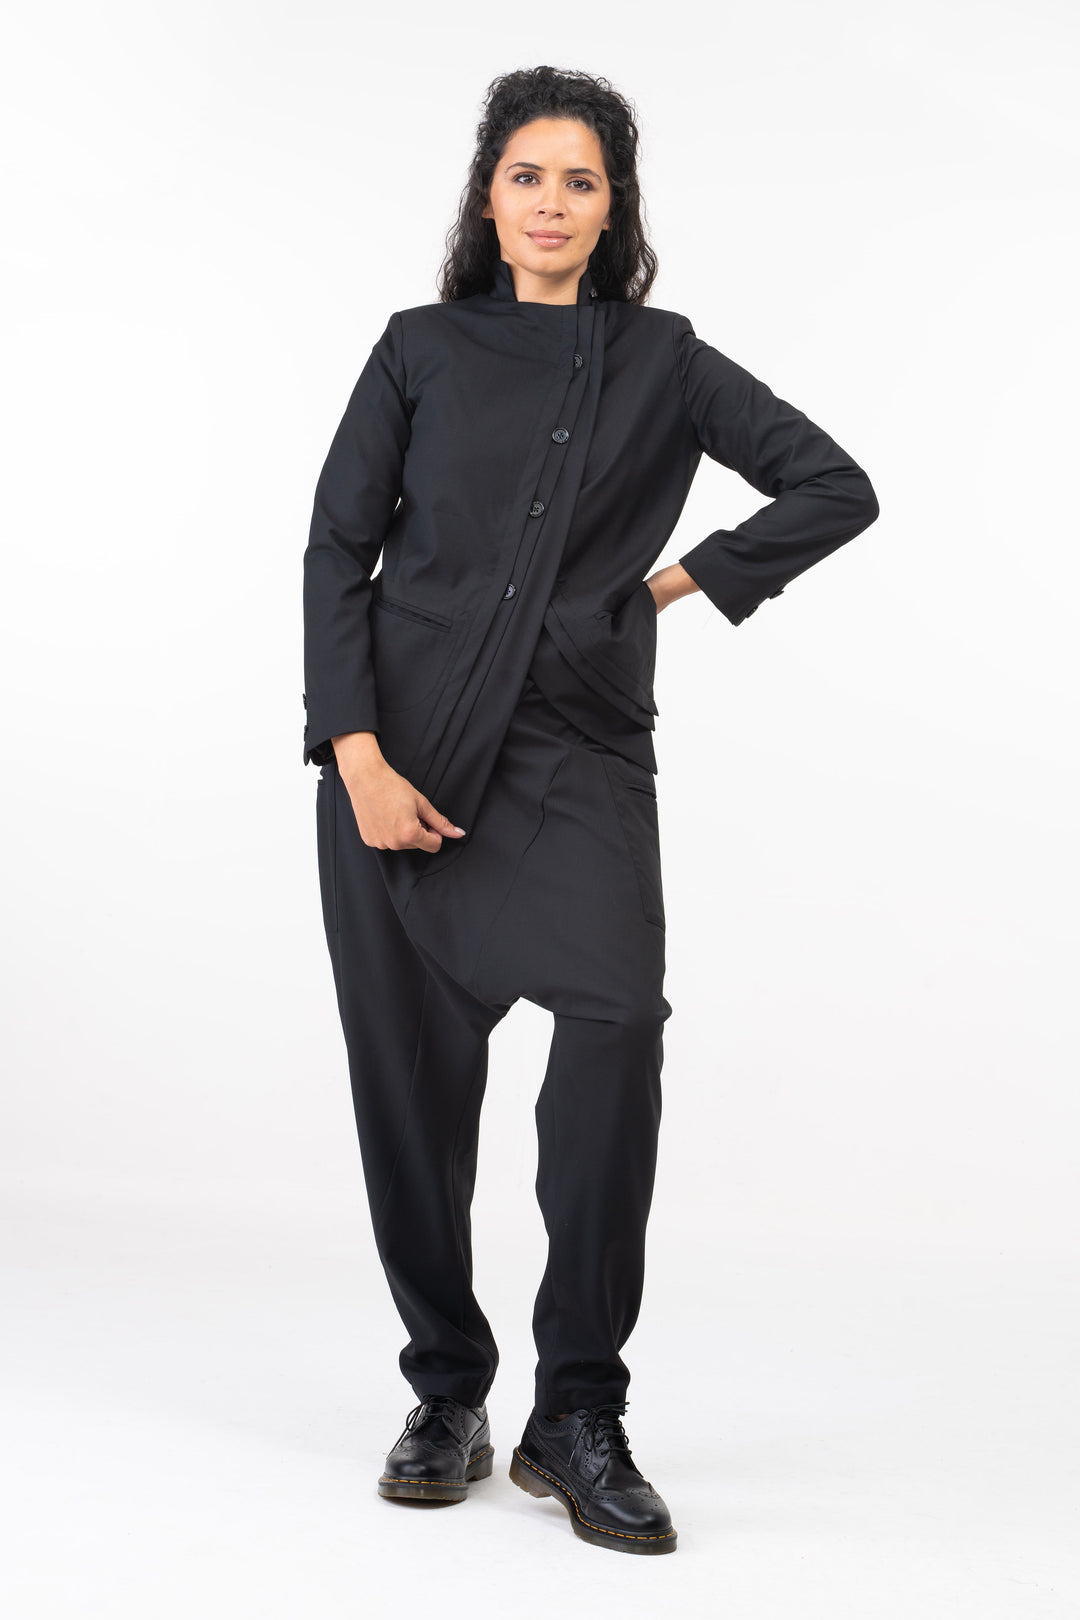 Asymmetrical Black Wool Blazer Women's